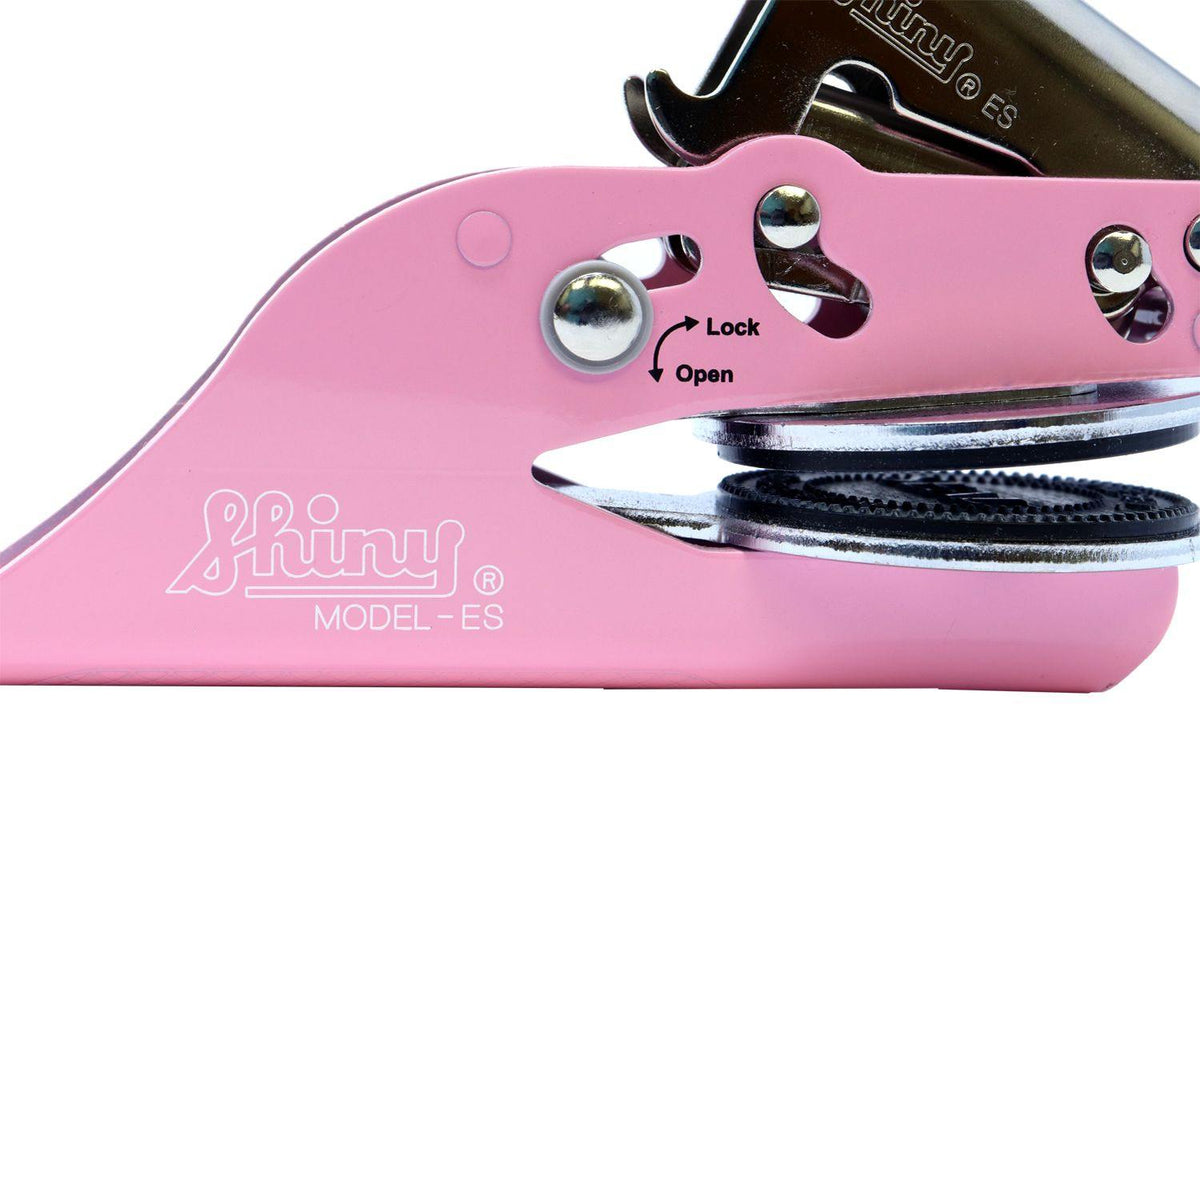 Geologist Pink Seal Handheld Embosser - Engineer Seal Stamps - Embosser Type_Handheld, Embosser Type_Soft Seal, Type of Use_Professional